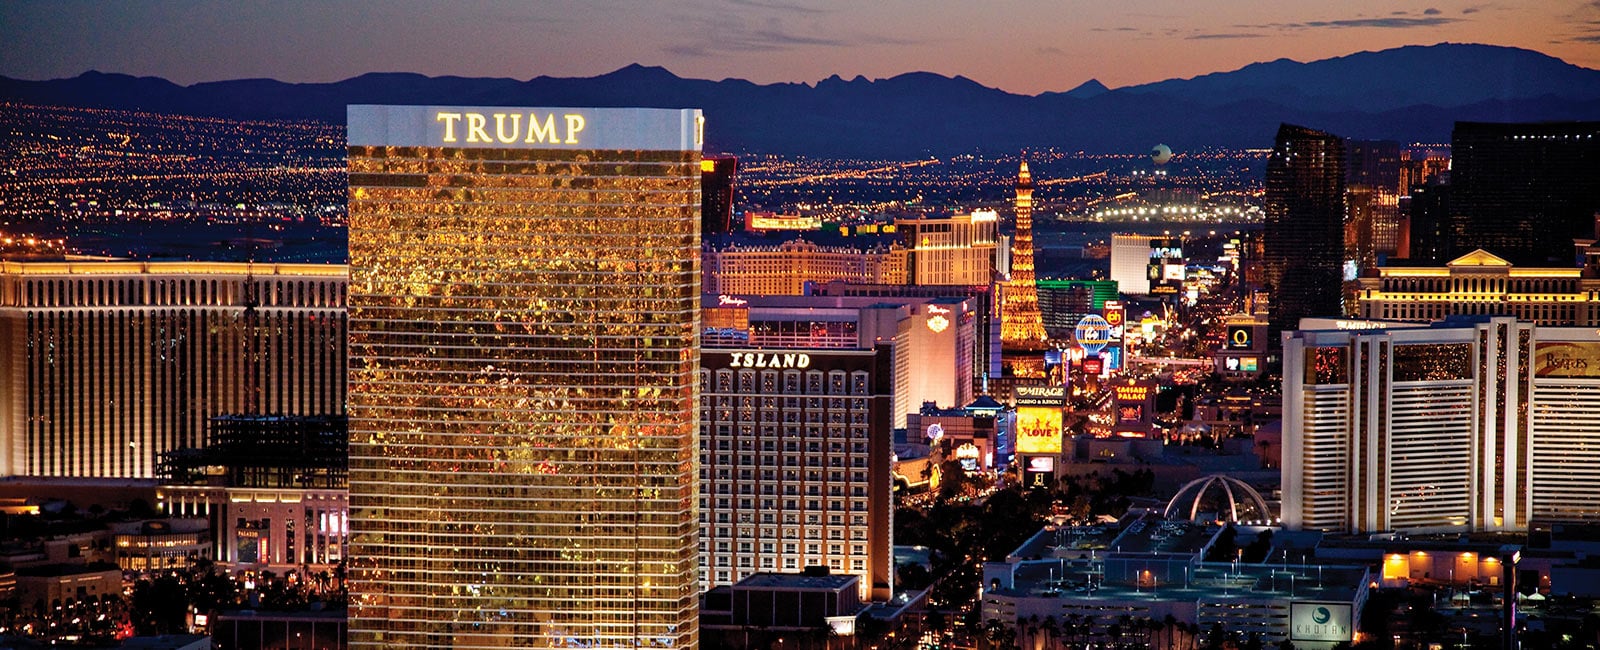 Exterior of Trump International Hotel in Las Vegas, Nevada